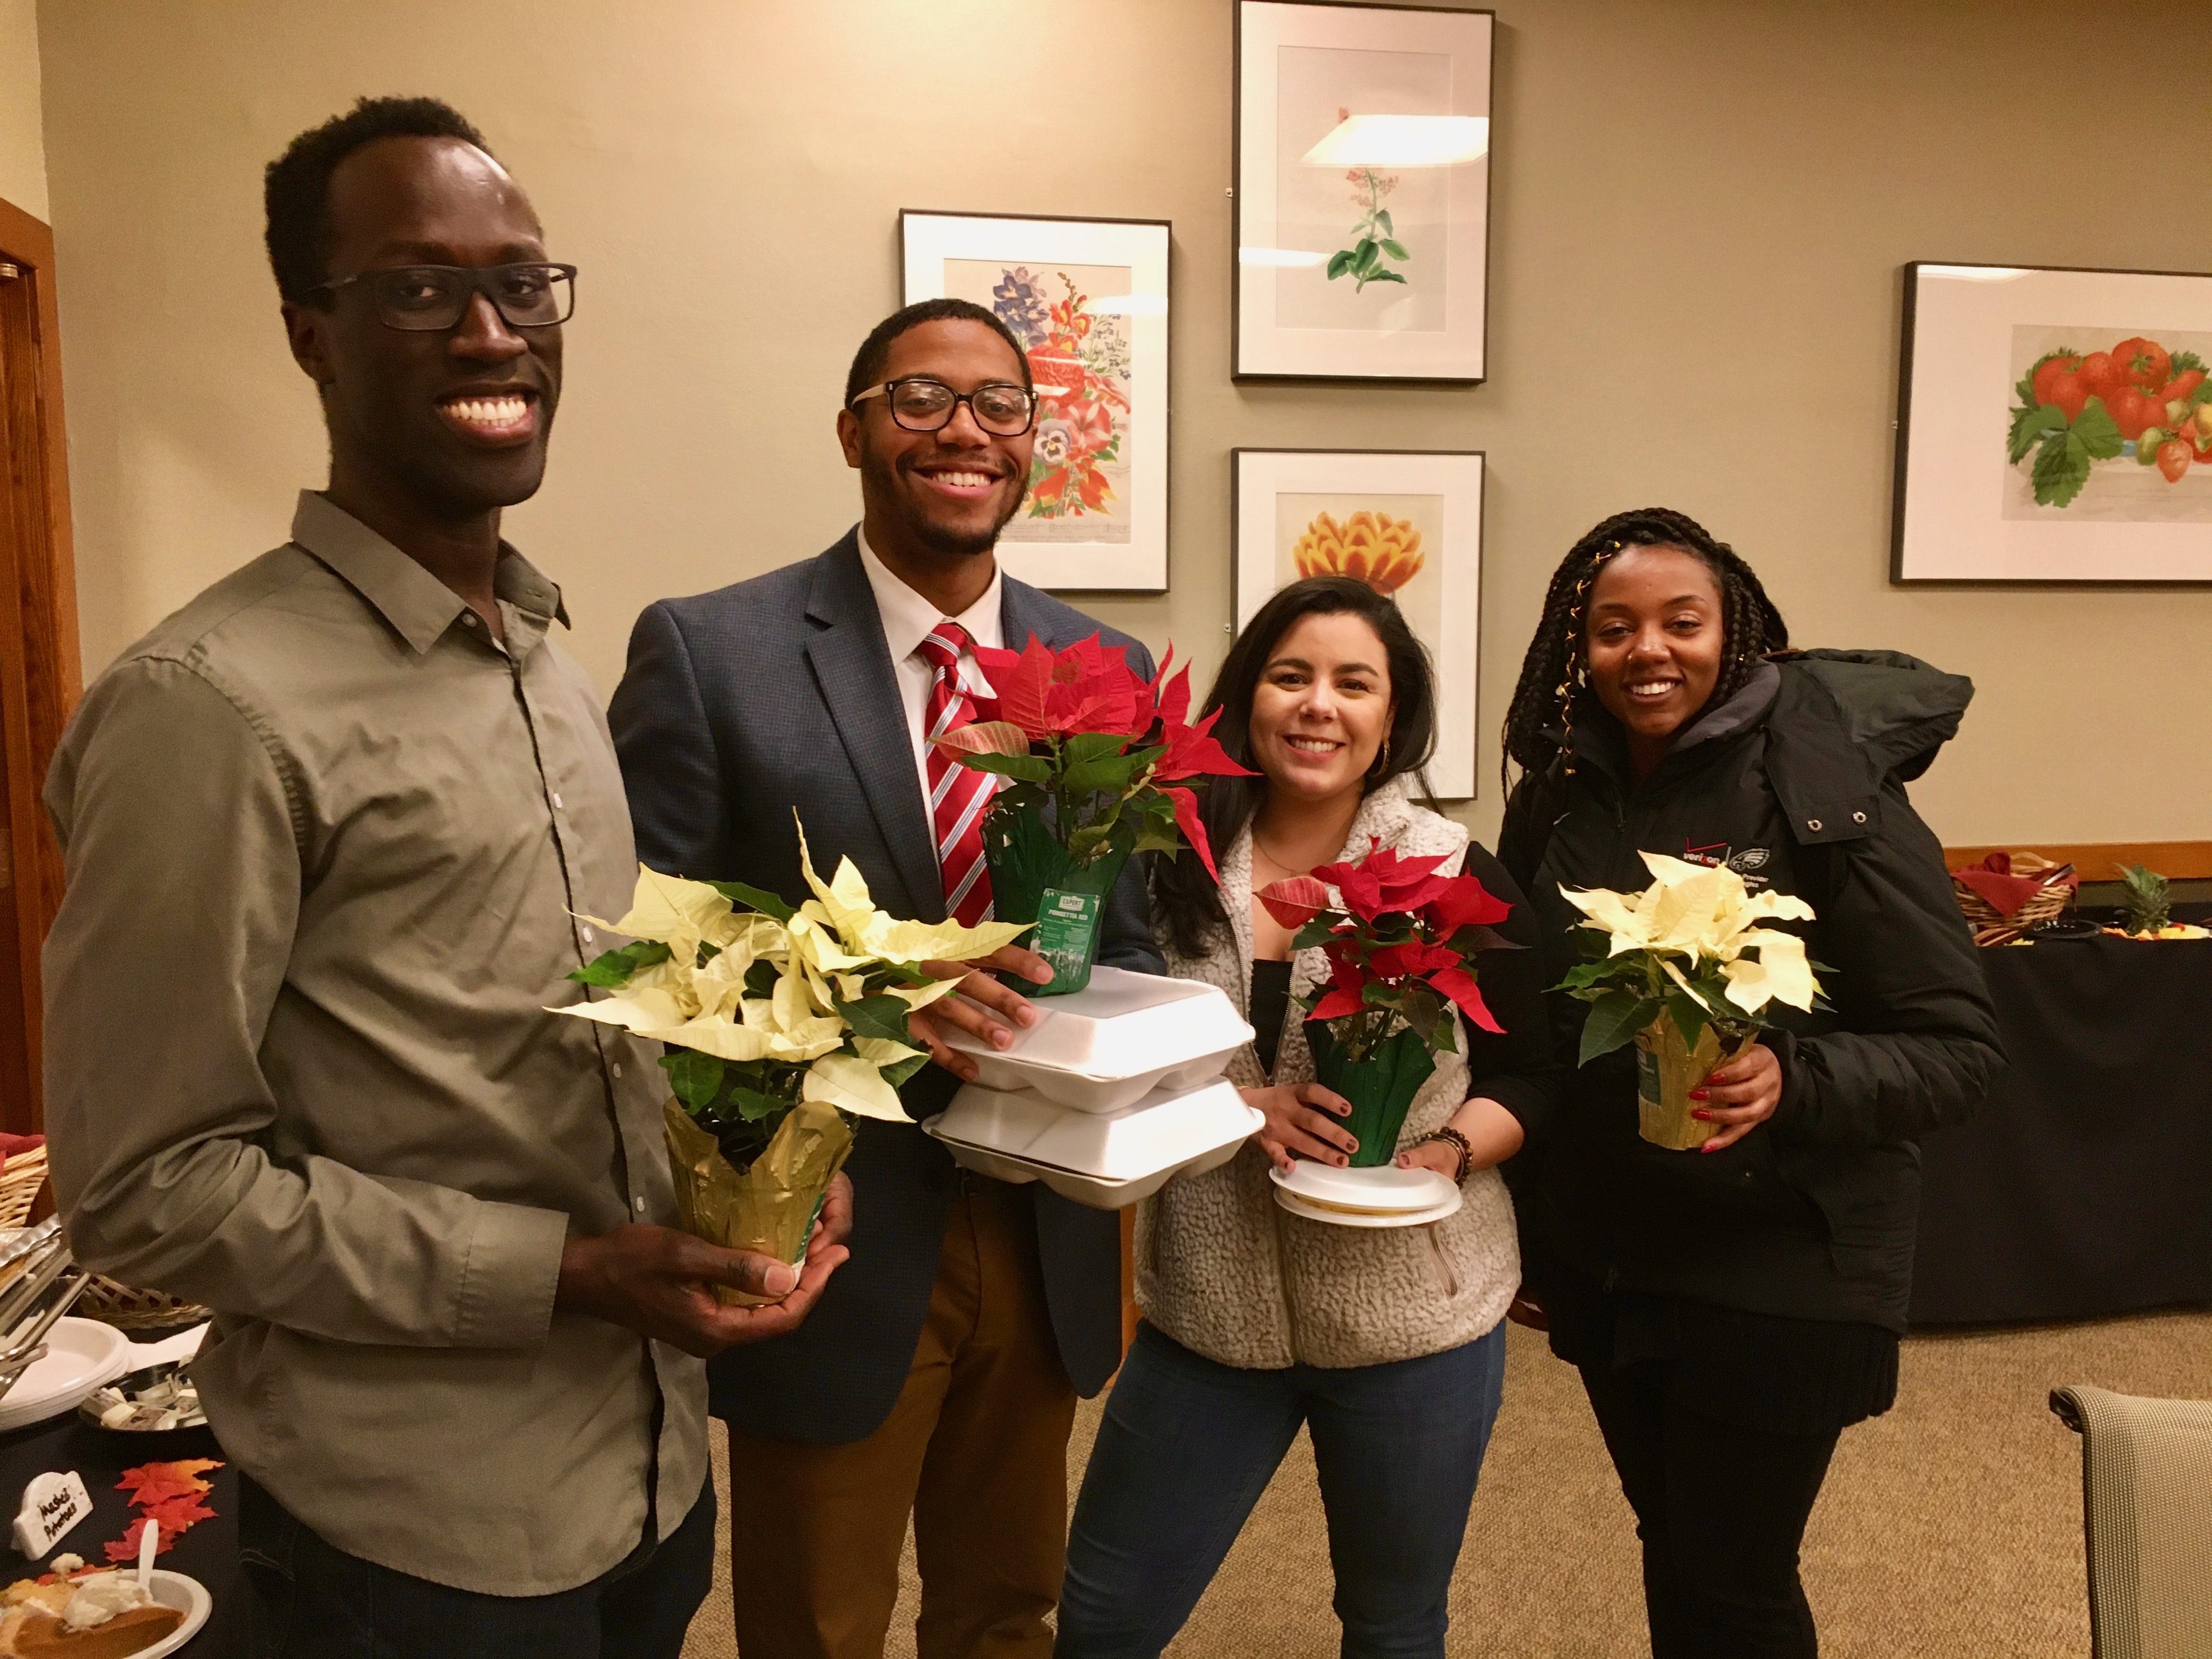 4 graduate students holding poinsettia flowers